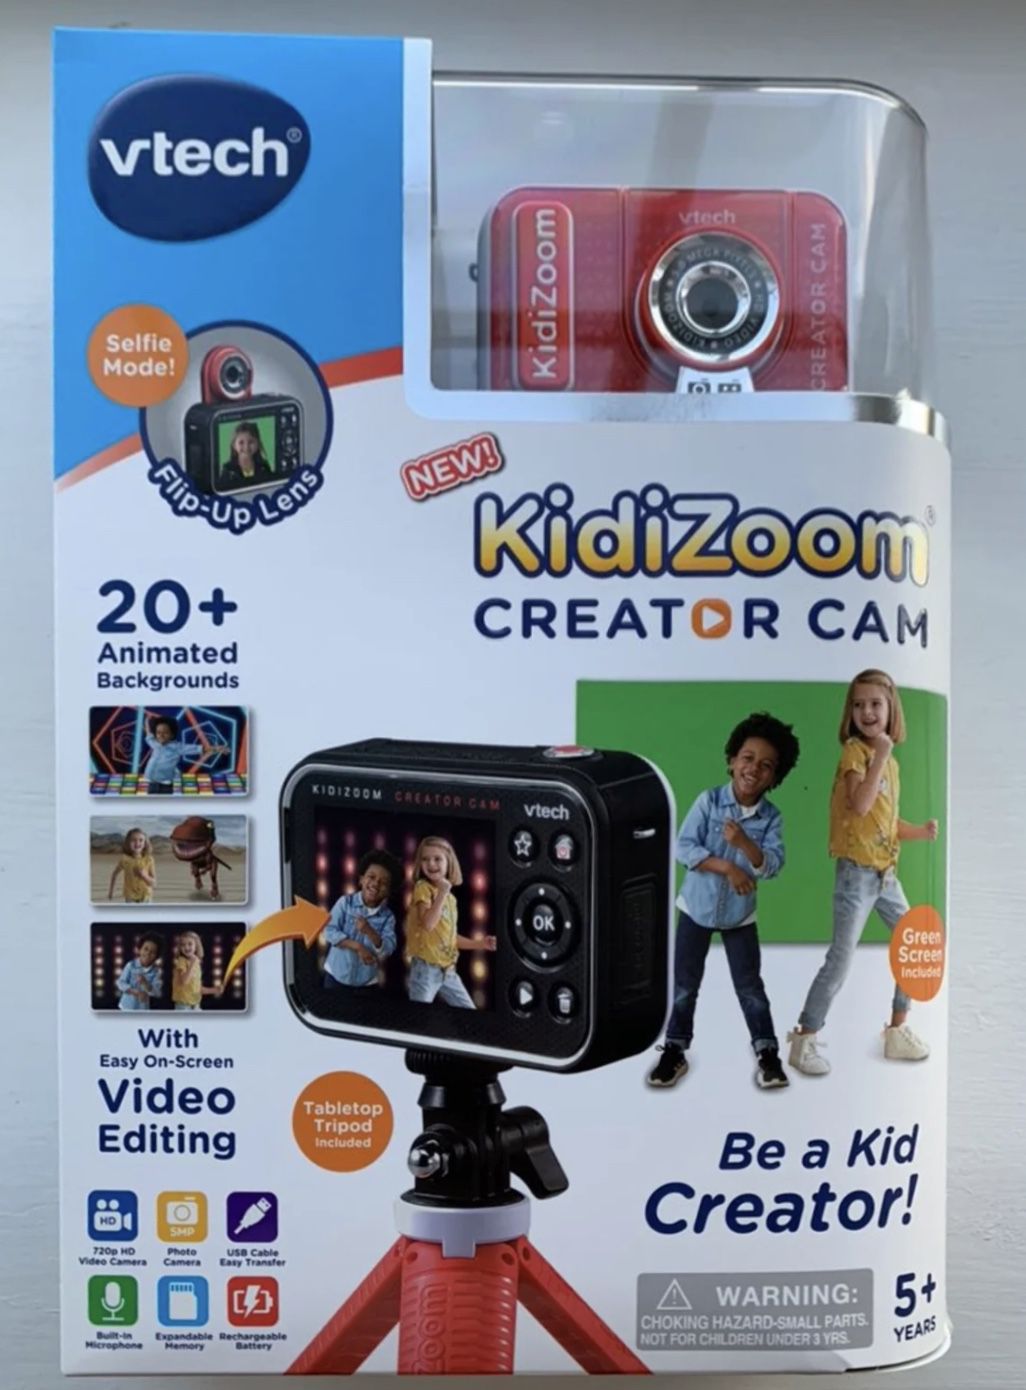 VTech KidiZoom Creator Cam HD Video Kids' Digital Camera